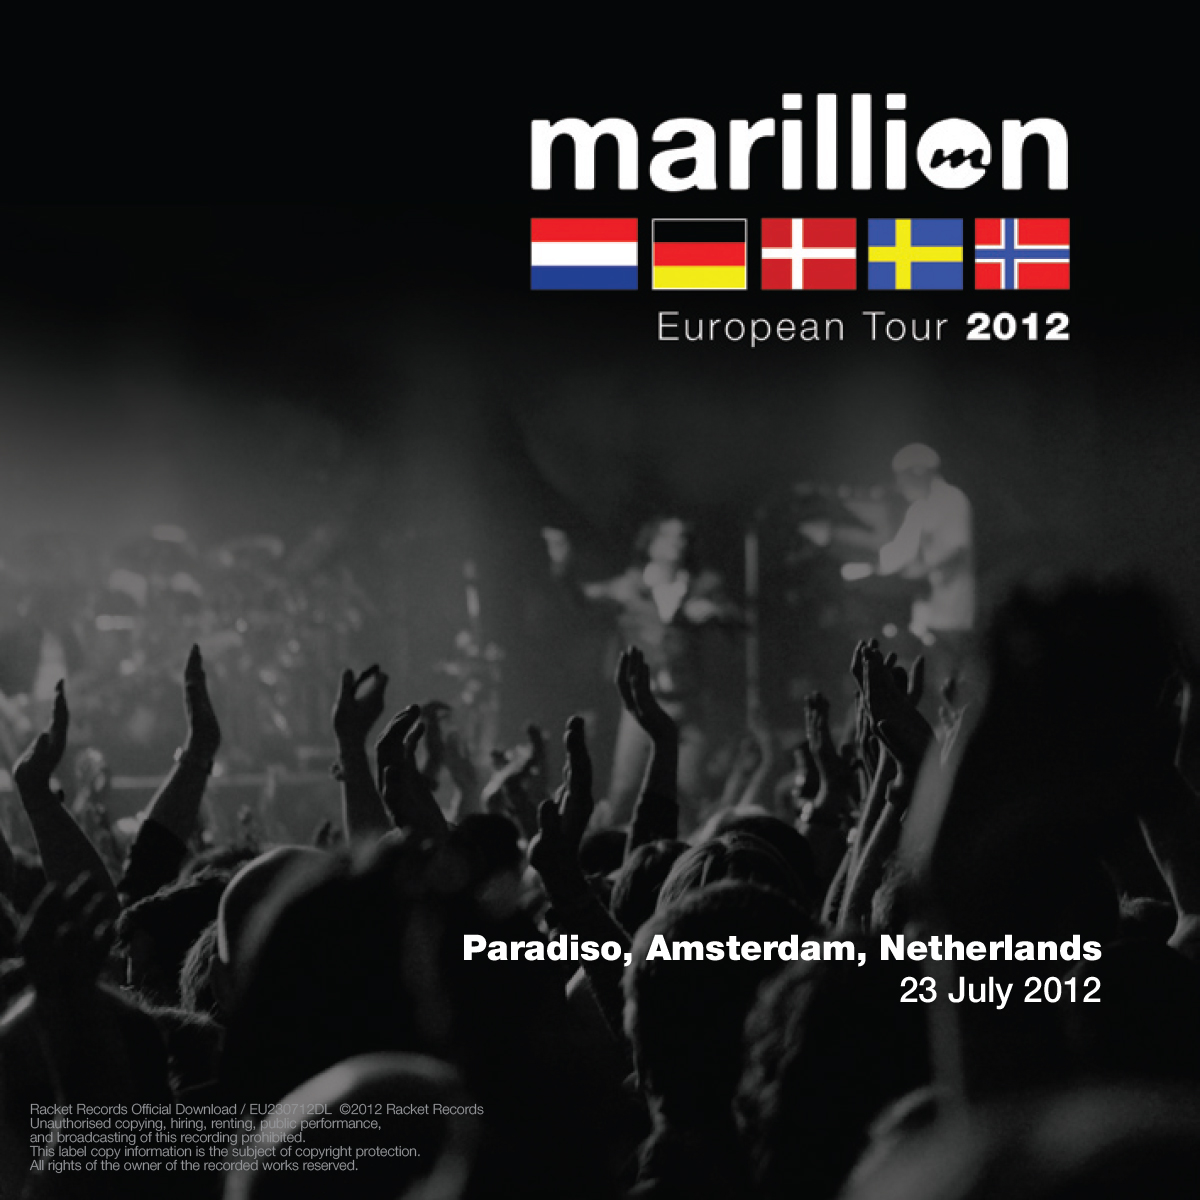 Paradiso, Amsterdam, NL<br>23rd July 2012 Live Download 320kbps